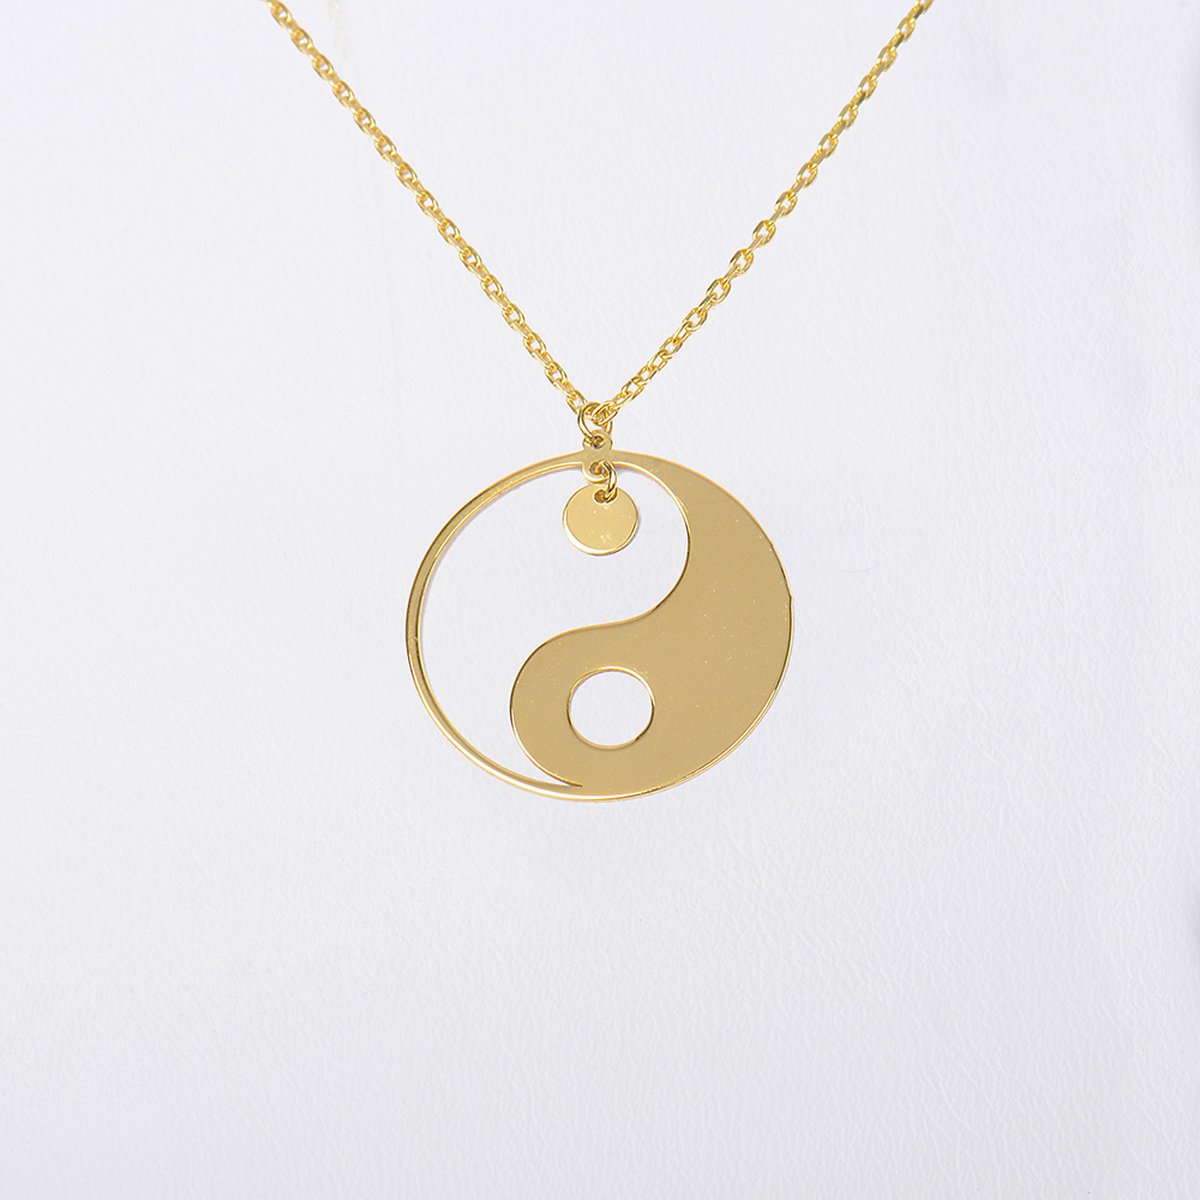 MeYuKu- Sieraden- 14 karaat gouden ketting met Yin Yang hanger